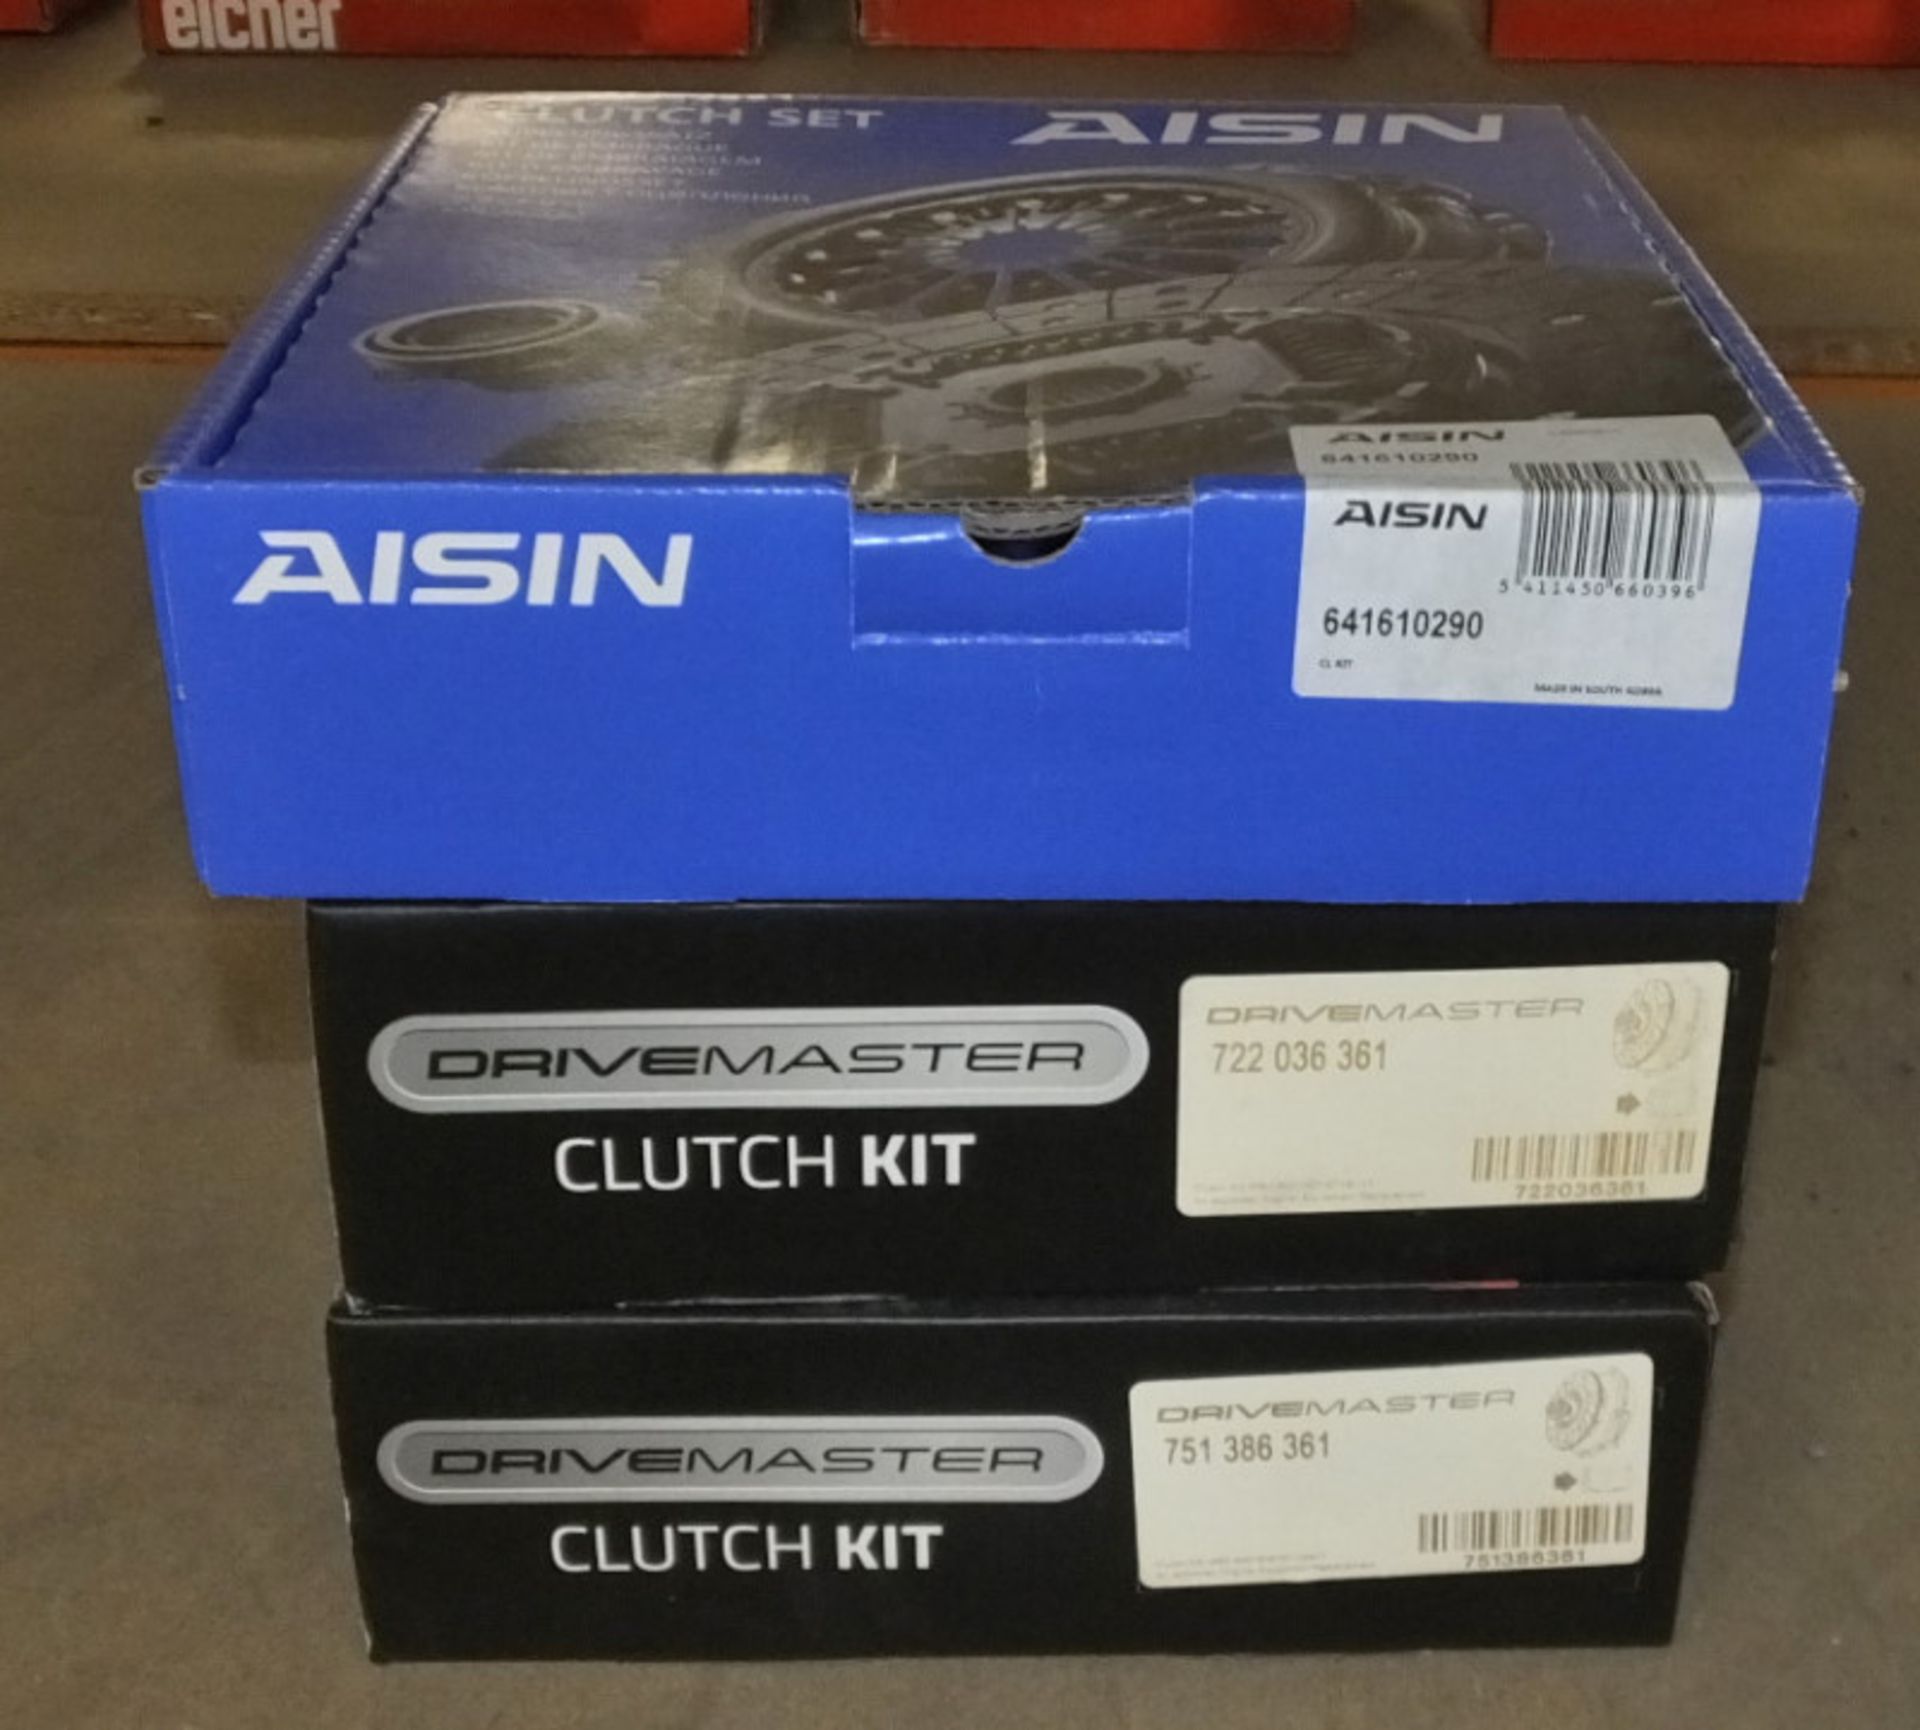 2x Drivemaster Clutch Kits (722 036 361 & 751 386 361) and Aisin 641610290 Clutch Set